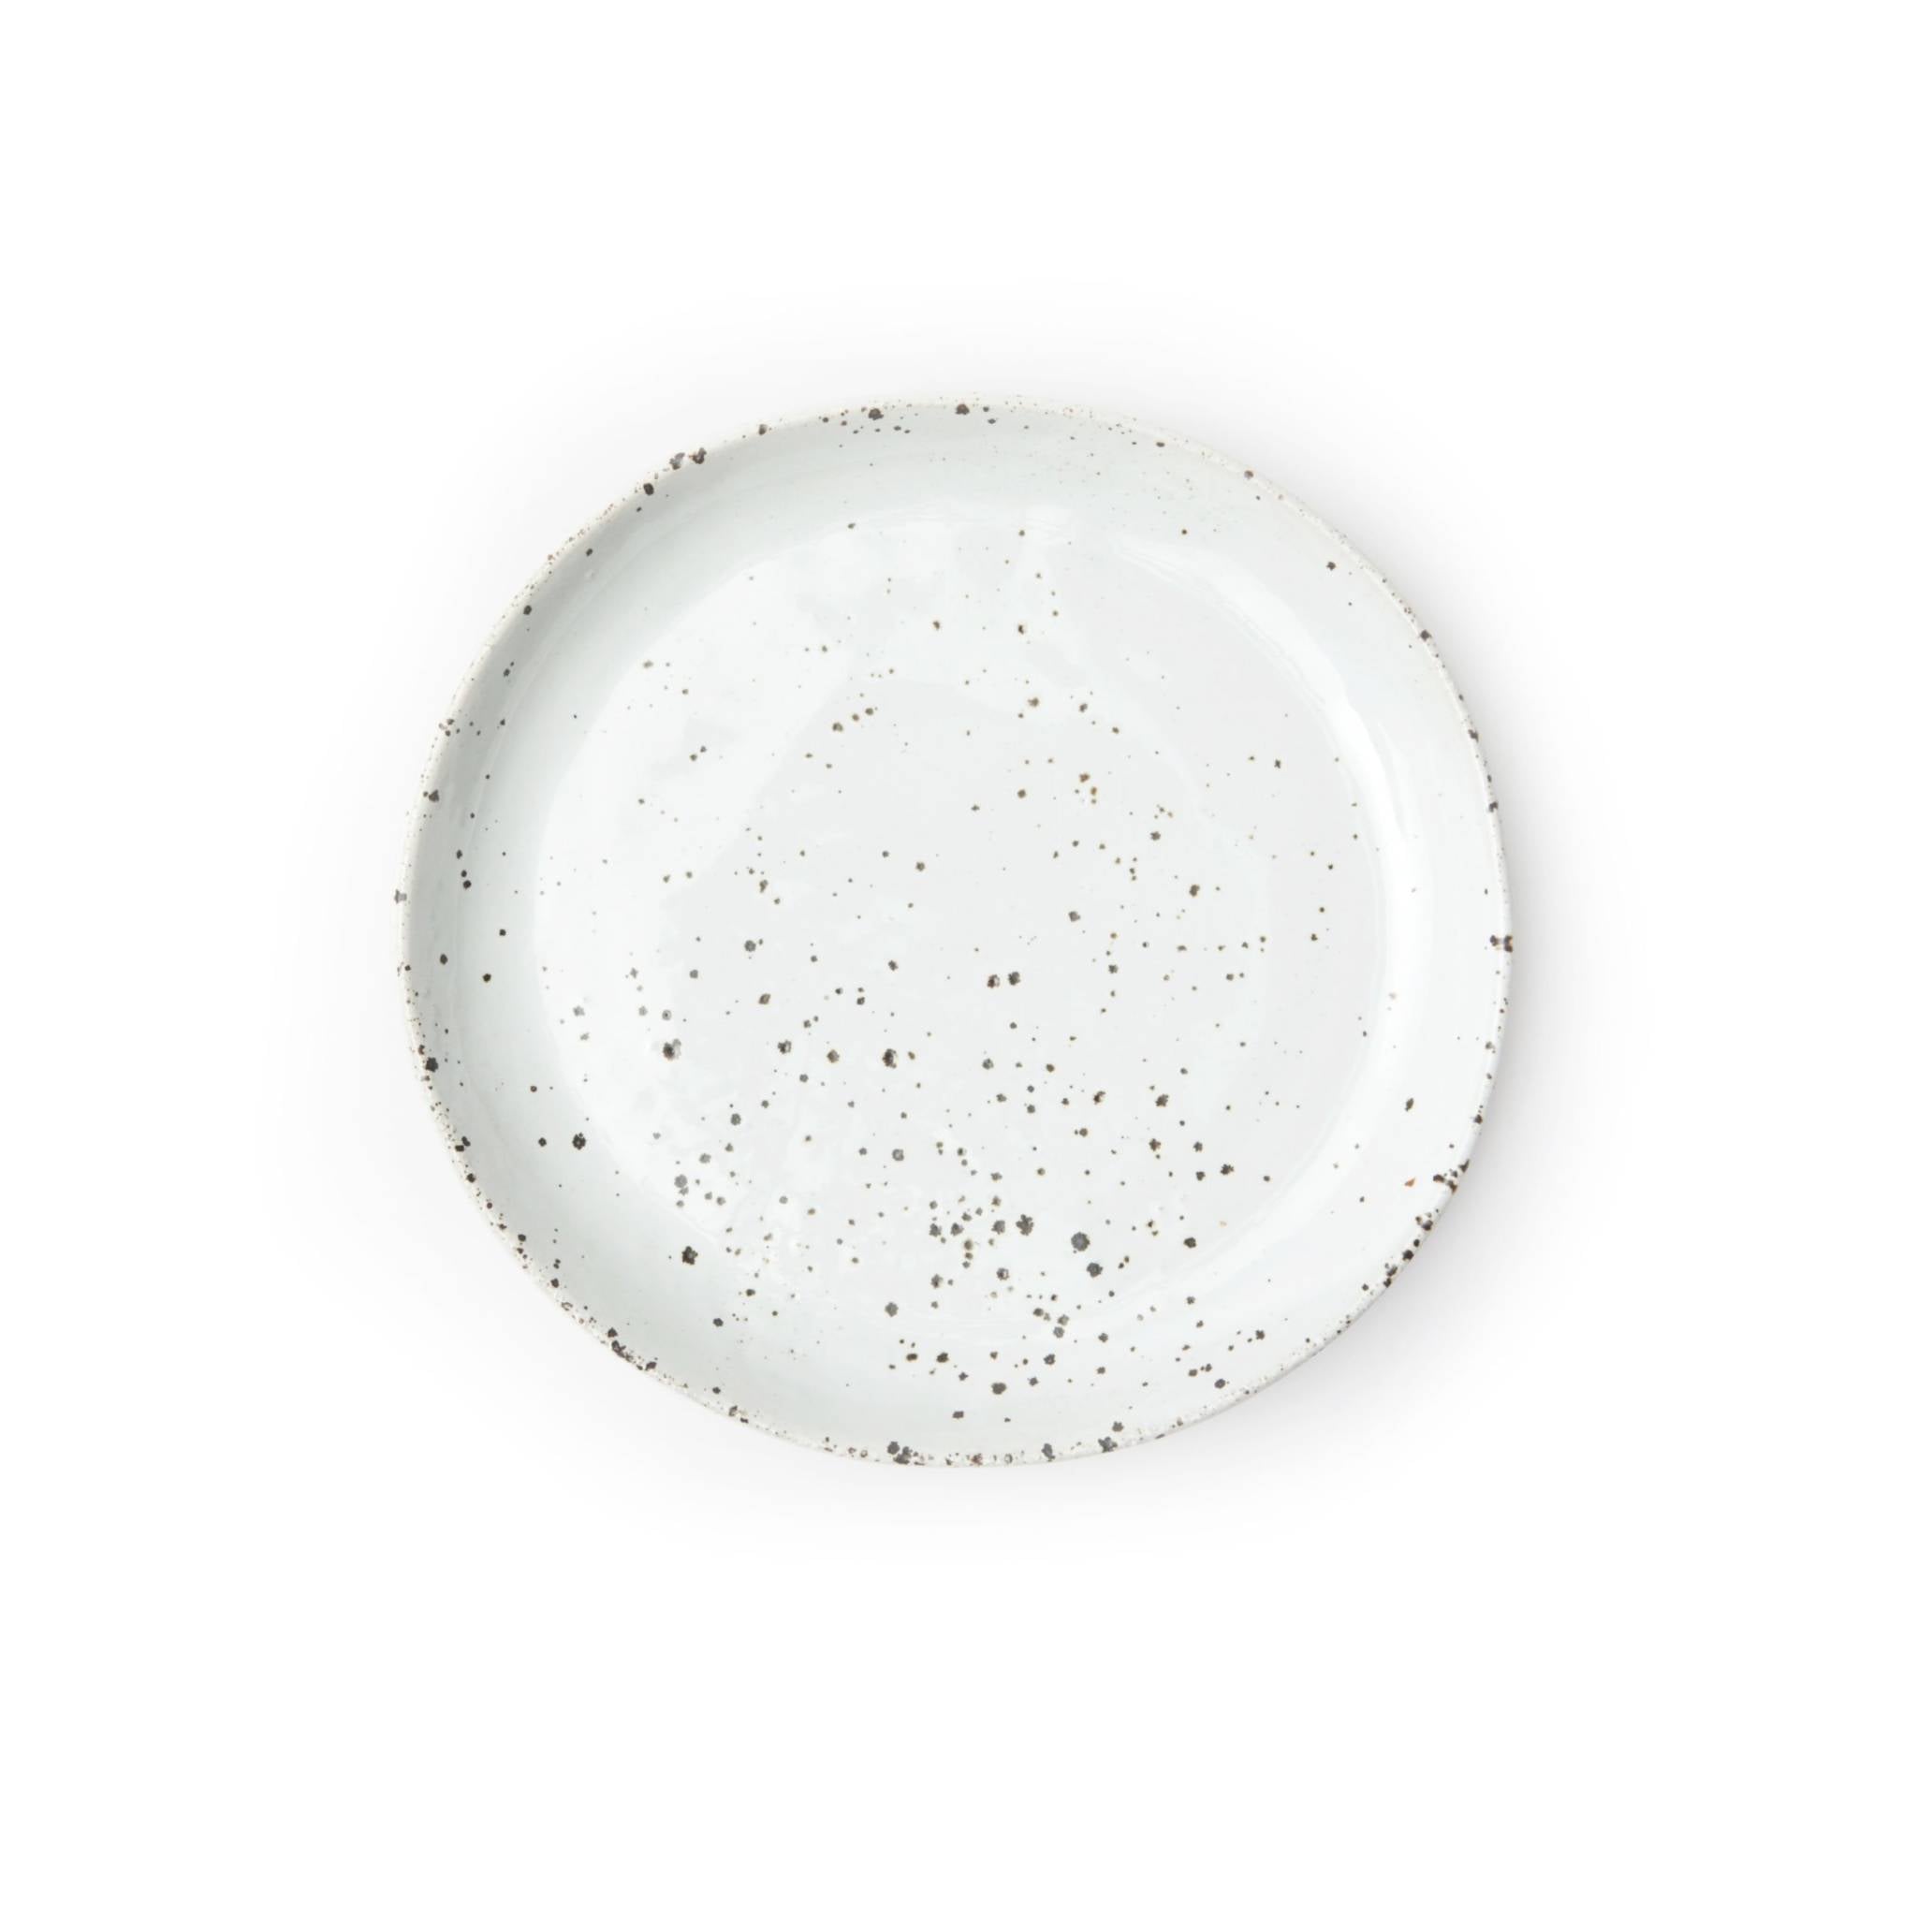 Marcus Salad/Dessert Plate Set of 4 - White